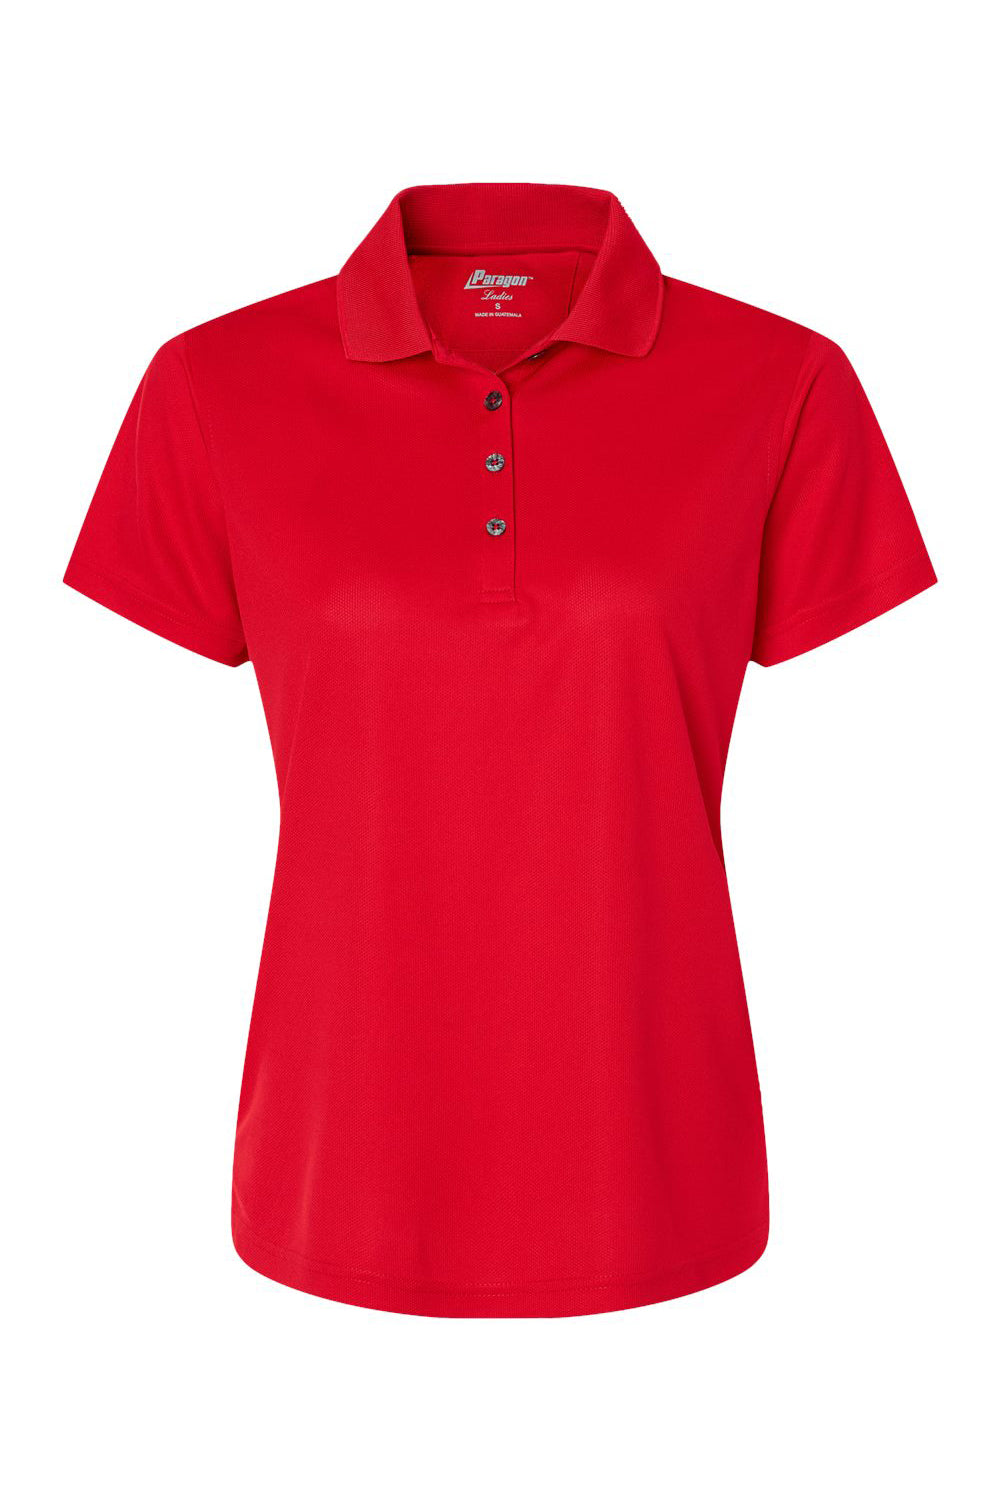 Paragon 104 Womens Saratoga Performance Mini Mesh Short Sleeve Polo Shirt Red Flat Front